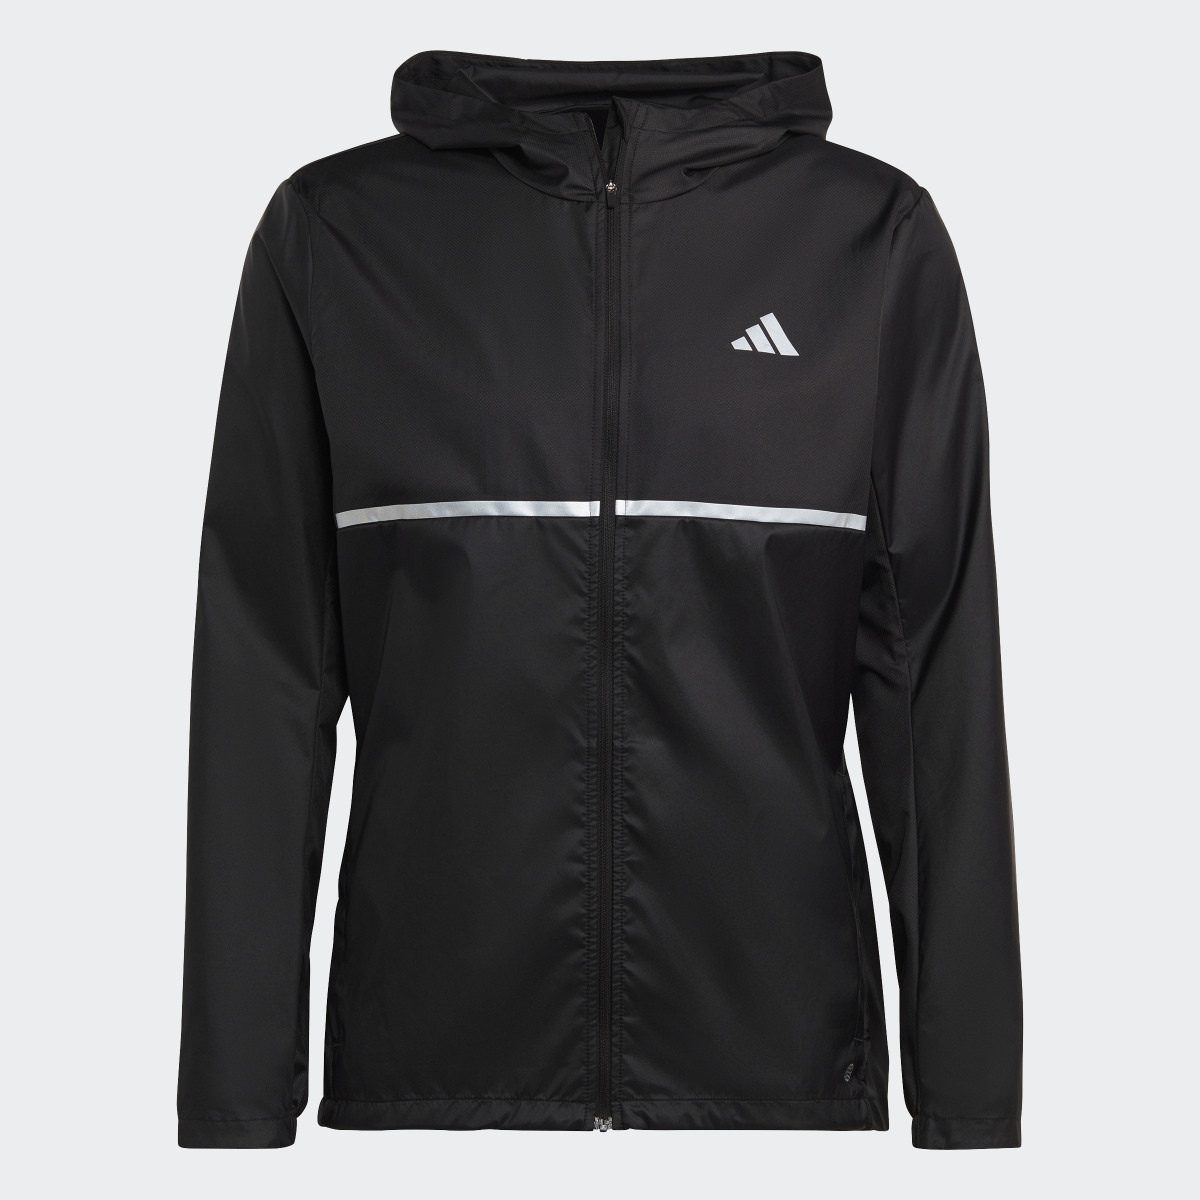 Adidas Own the Run Jacket. 5